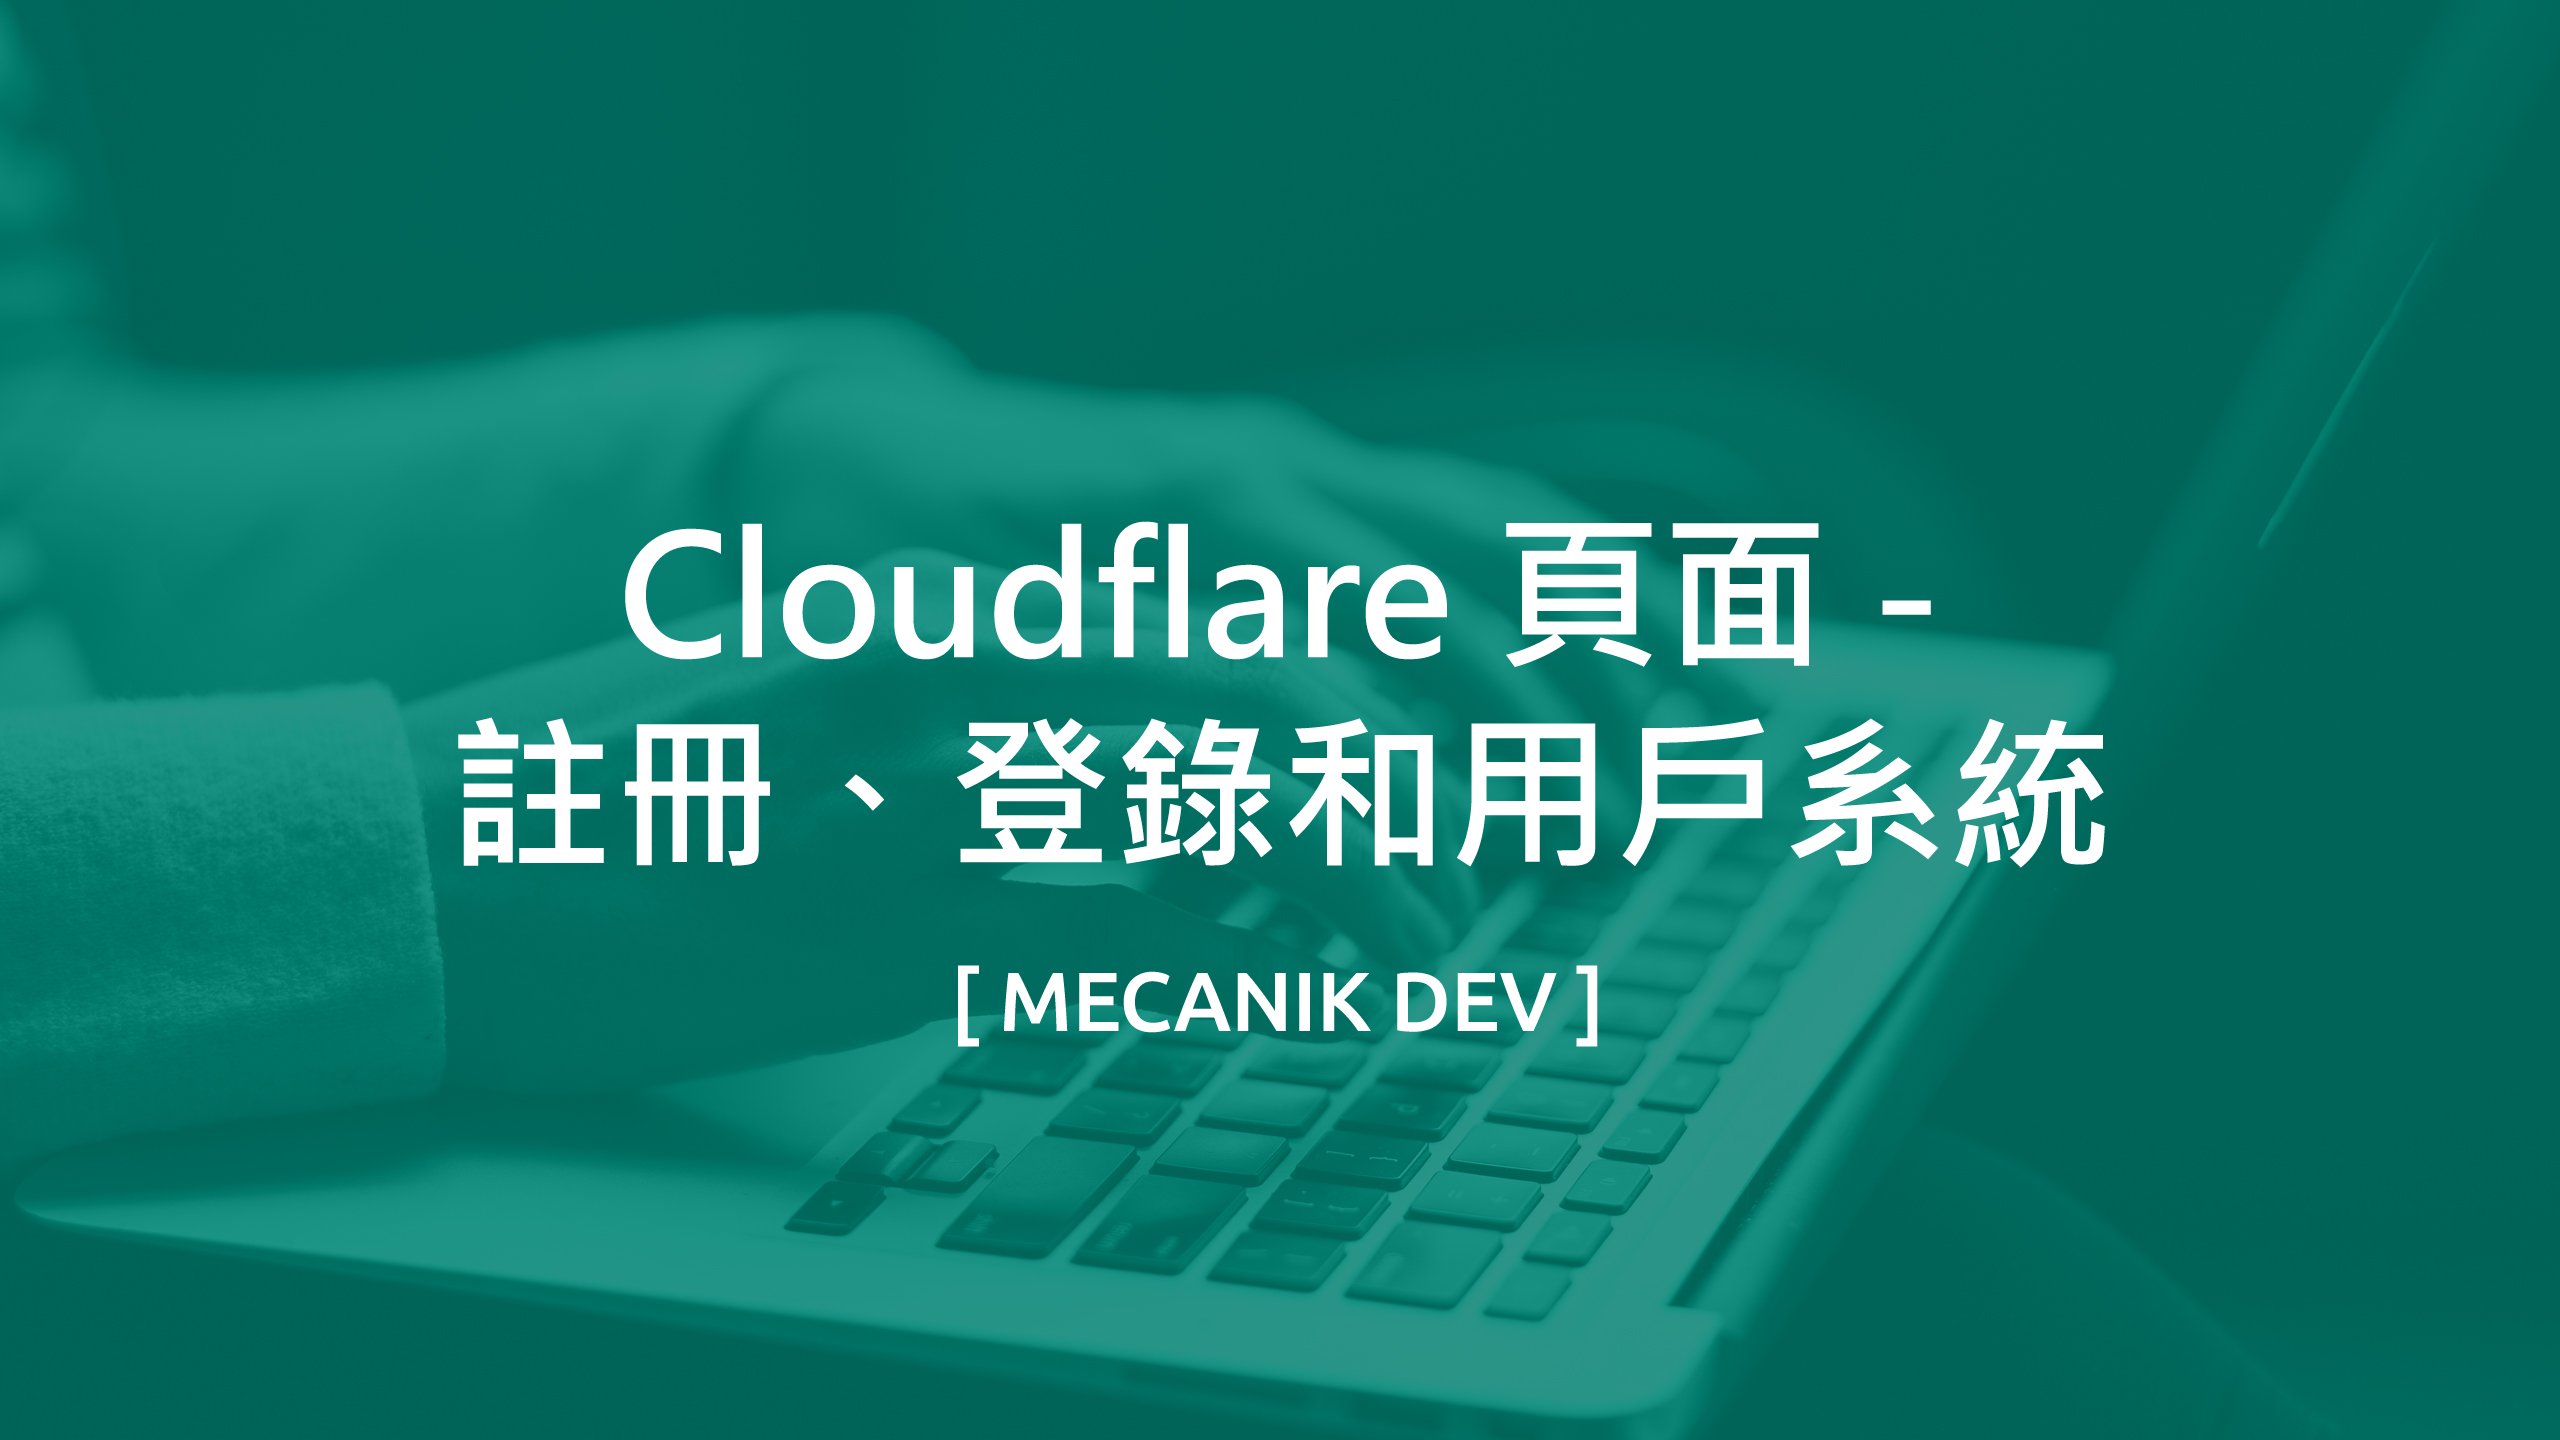 Cloudflare 頁面 - 註冊、登錄和用戶系統